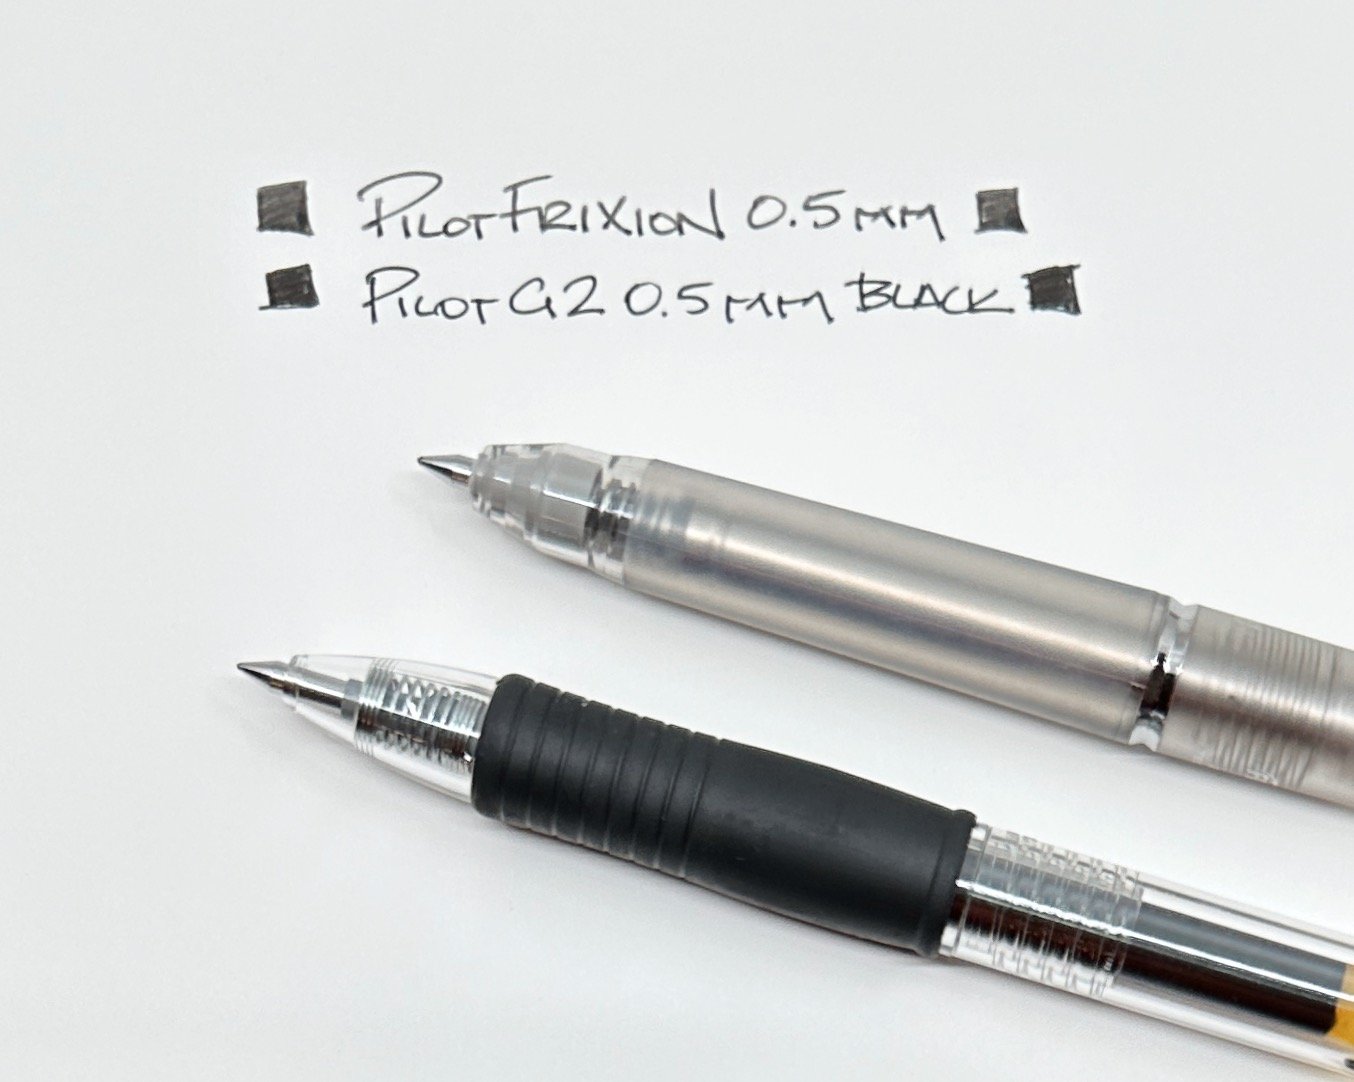 Erasable Gel Pens - Pilot Frixion Clicker Retractable Gel Pens Review 